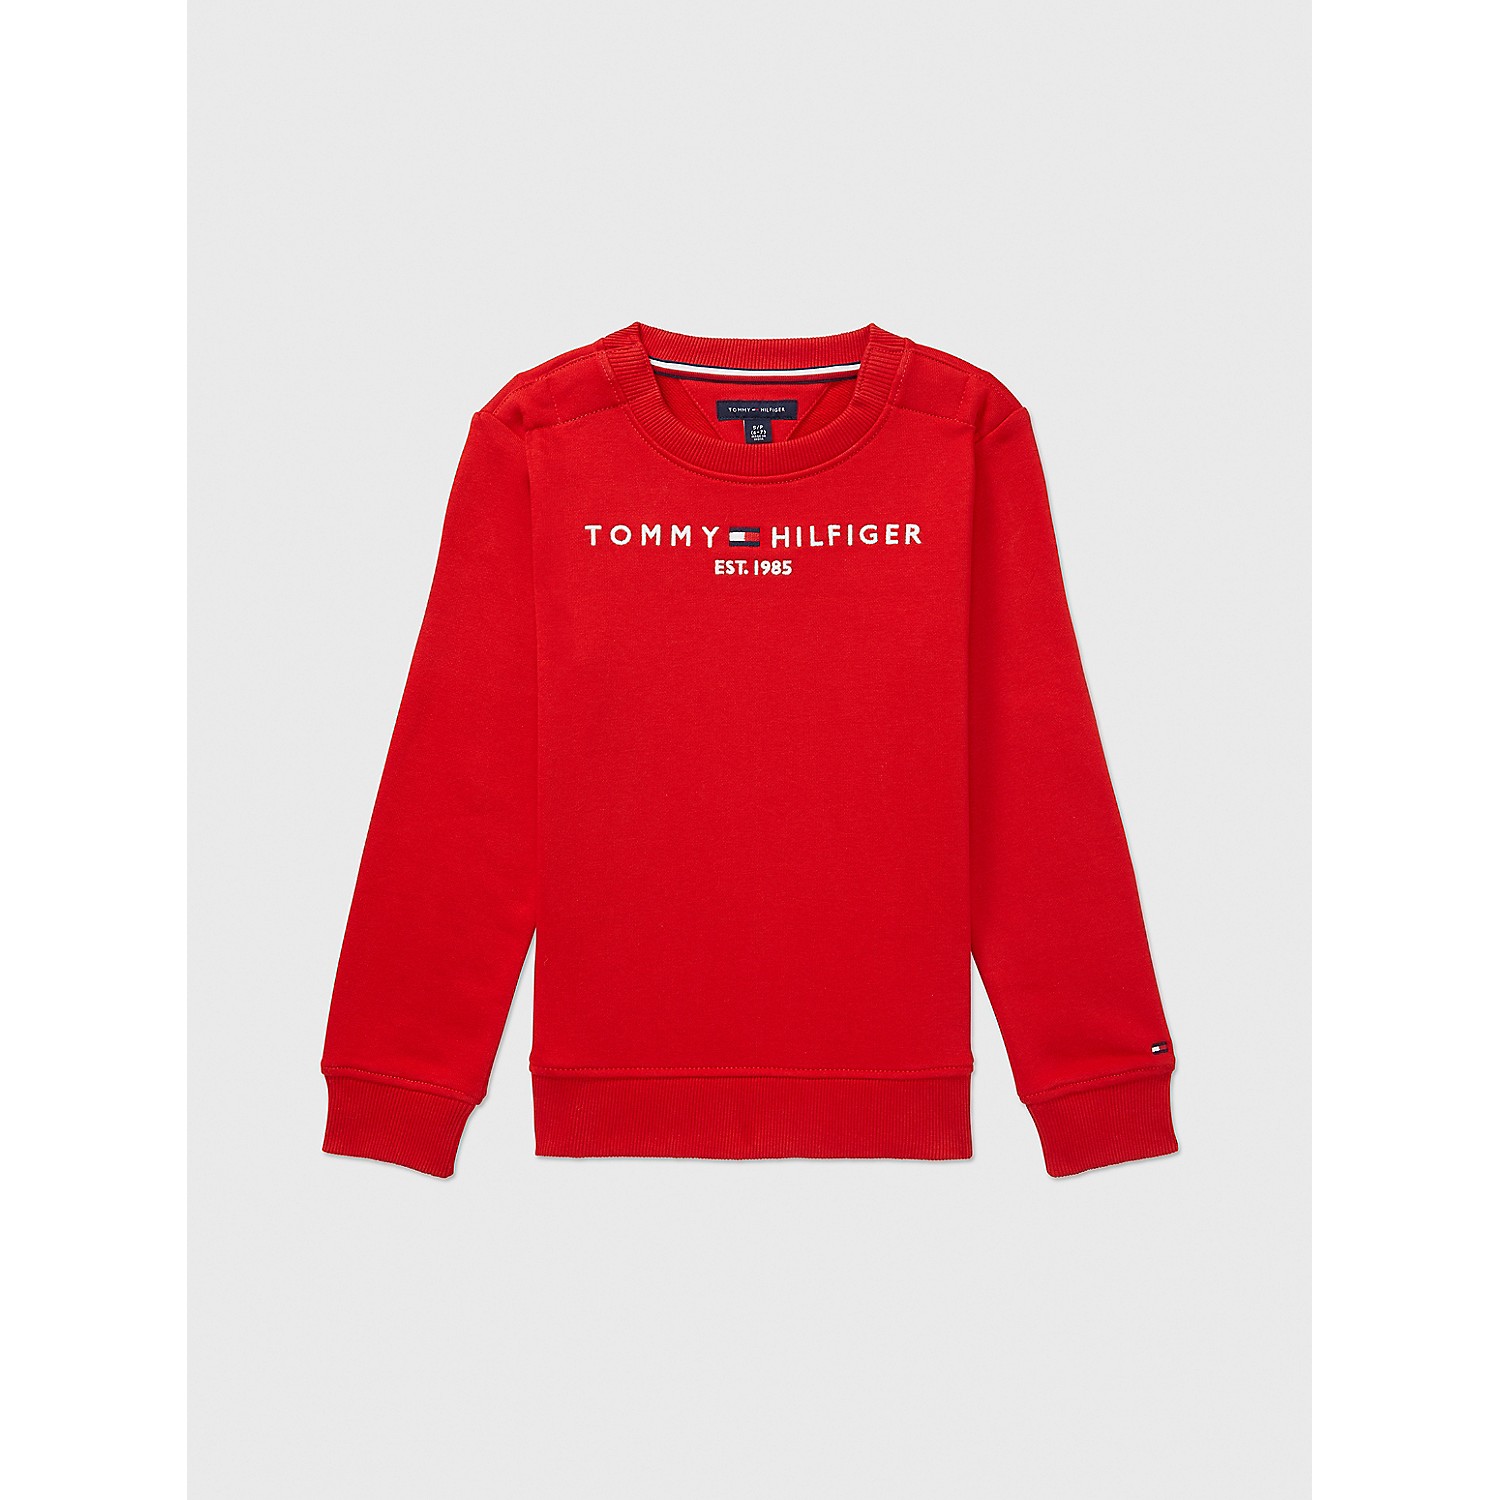 TOMMY HILFIGER Kids Classic Sweatshirt